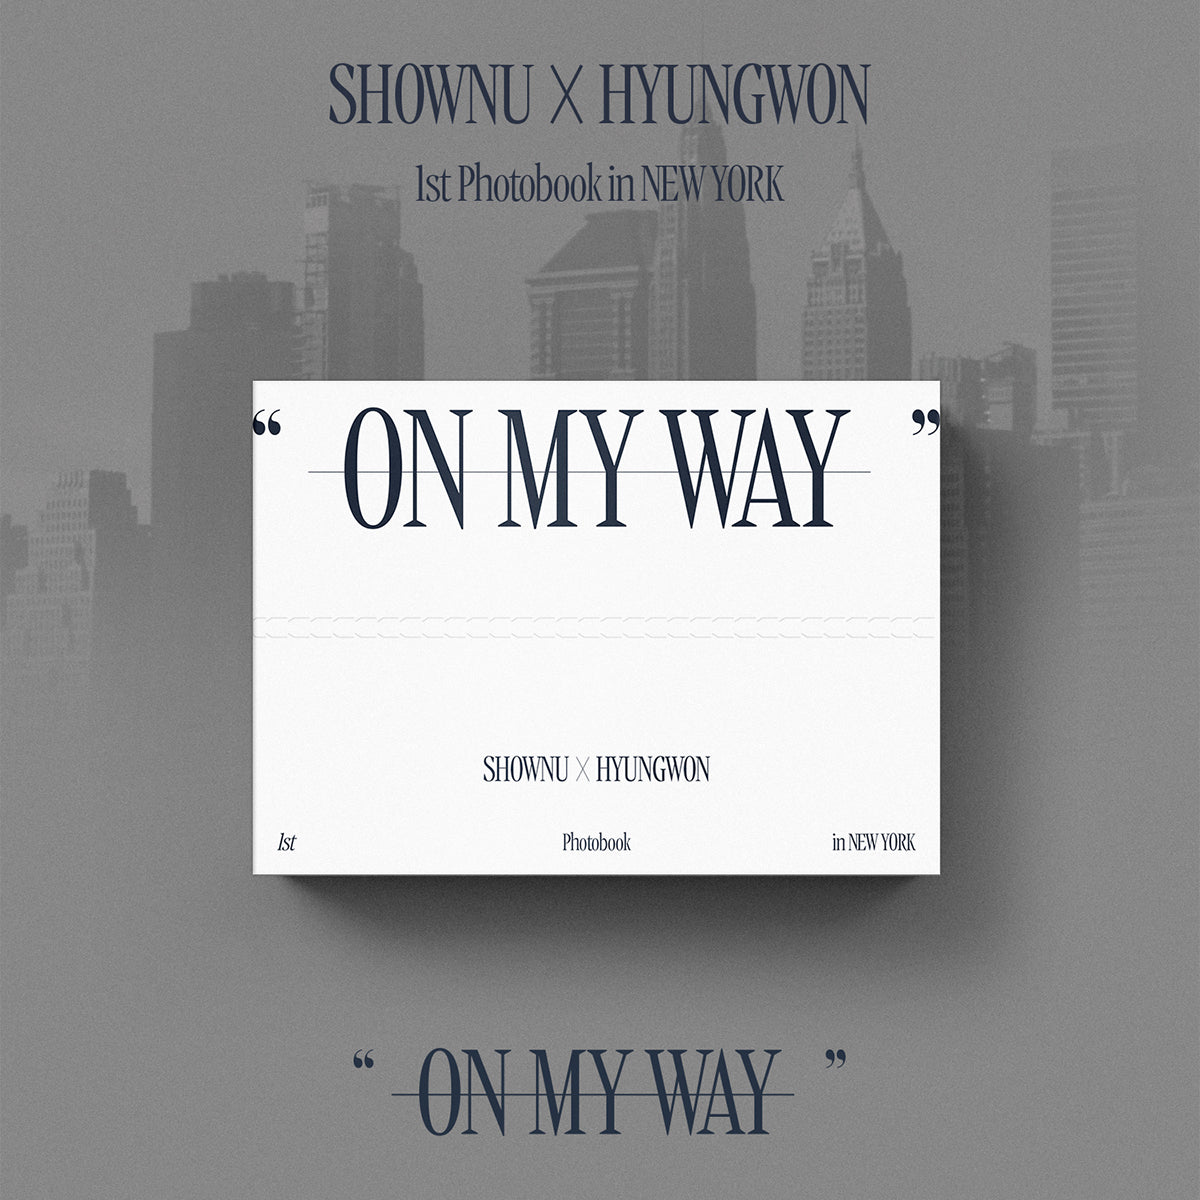 SHOWNU X HYUNGWON (MONSTA X) - 1st Photobook in NEWYORK "ON MY WAY"